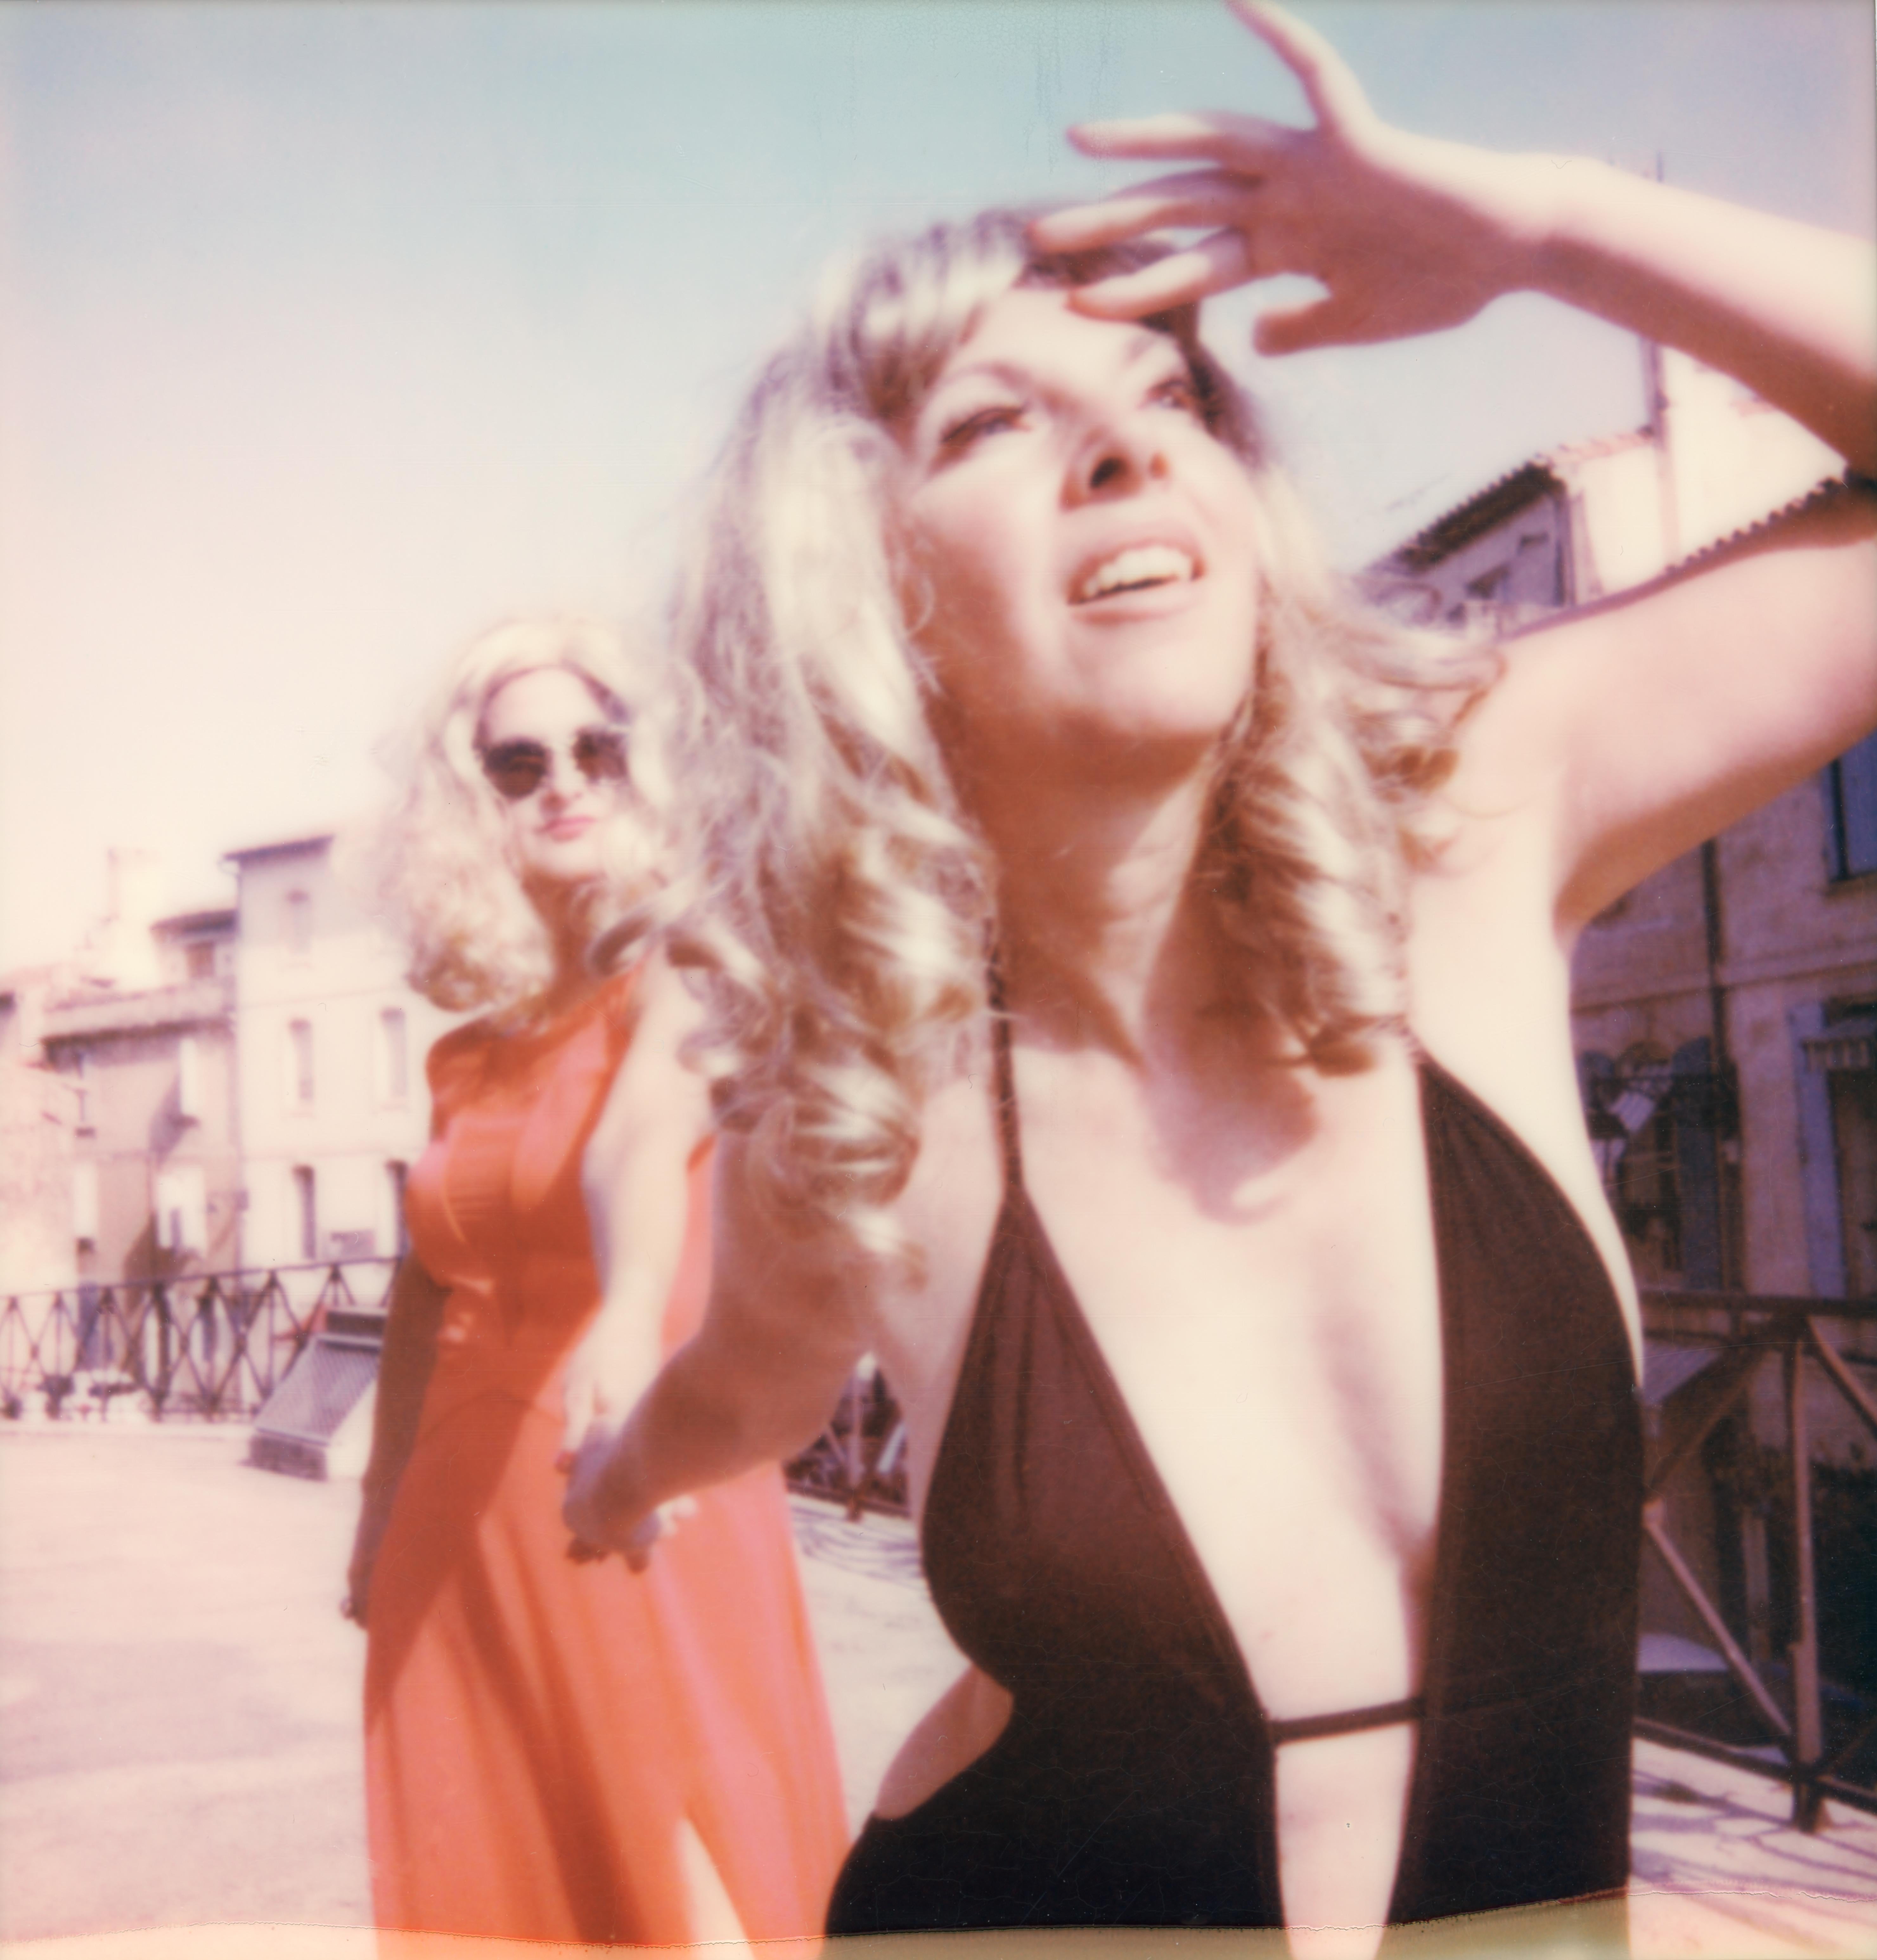 Clare Marie Bailey Color Photograph – La Malla II - Zeitgenössisch, Polaroid, Fotografie, figürlich, Porträt